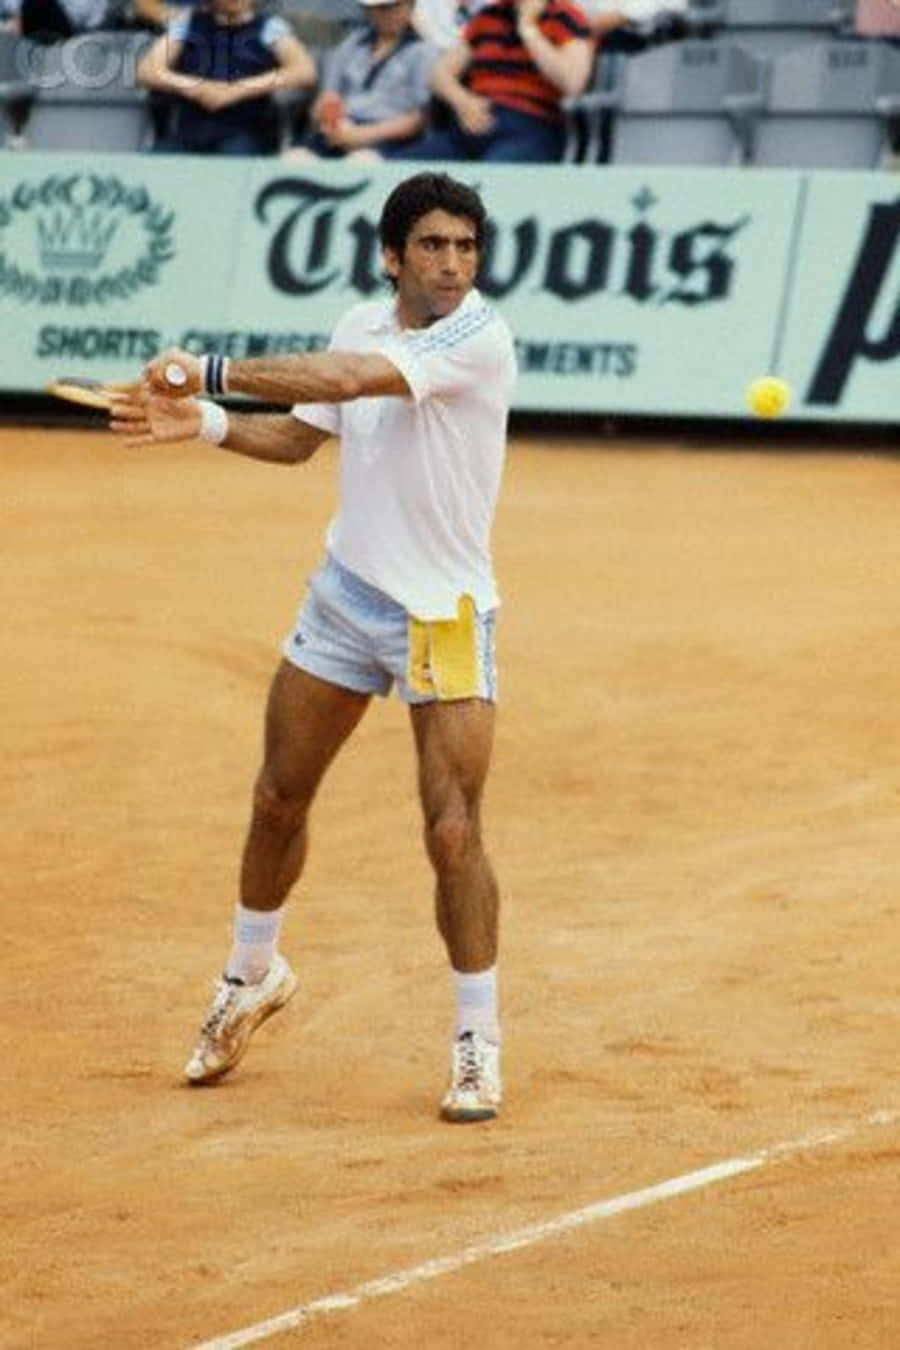 Spansk tennis spiller Manuel Orantes French Open mester 1974 Wallpaper